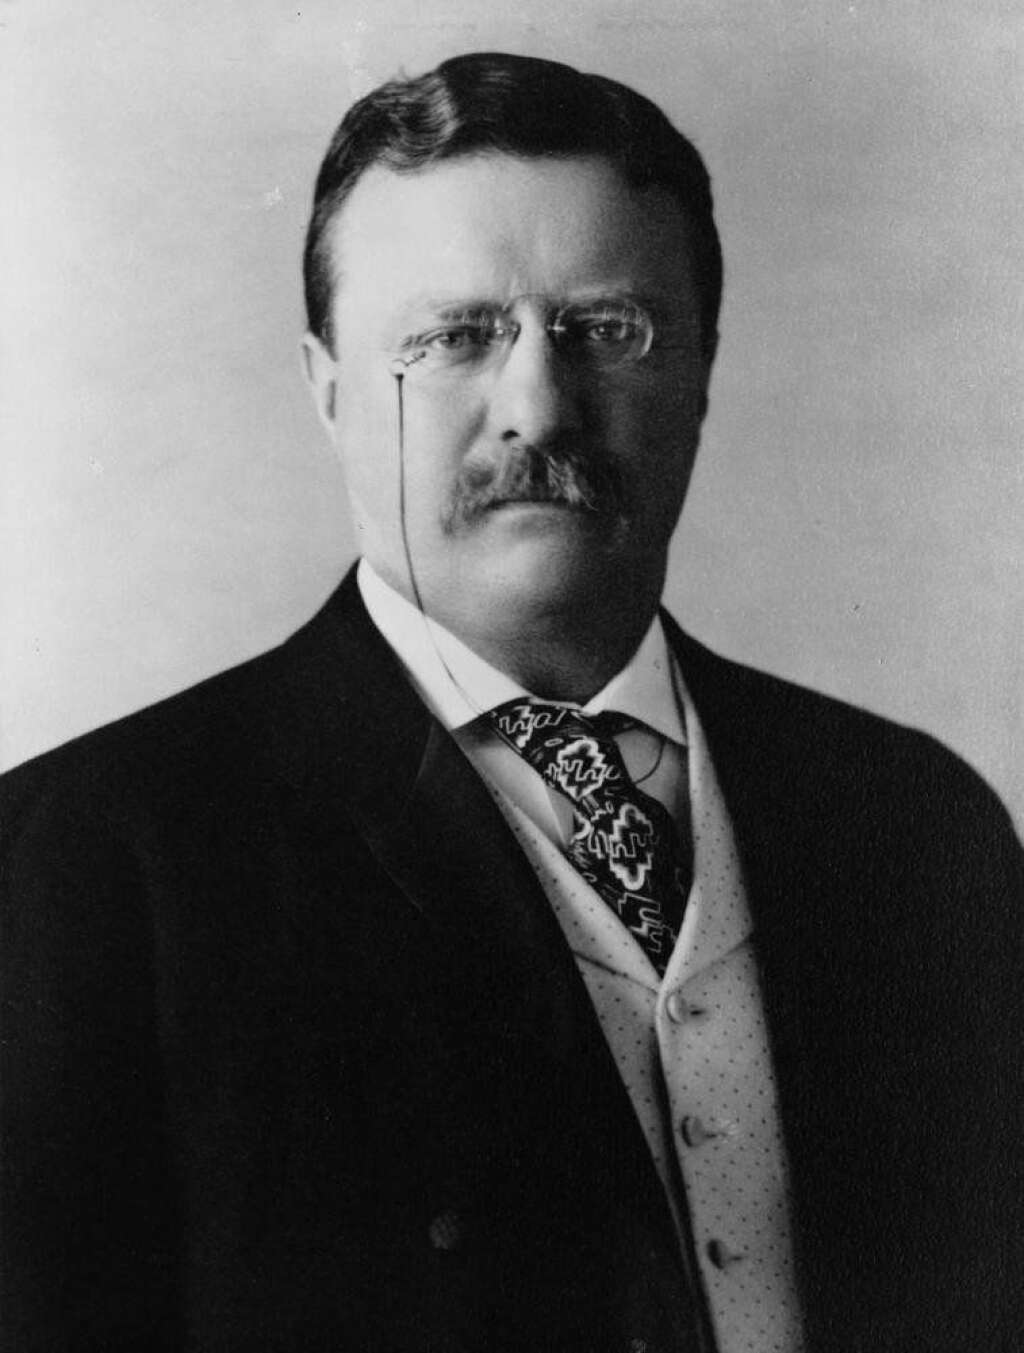 Theodore "Teddy" Roosevelt 1901-1909 -